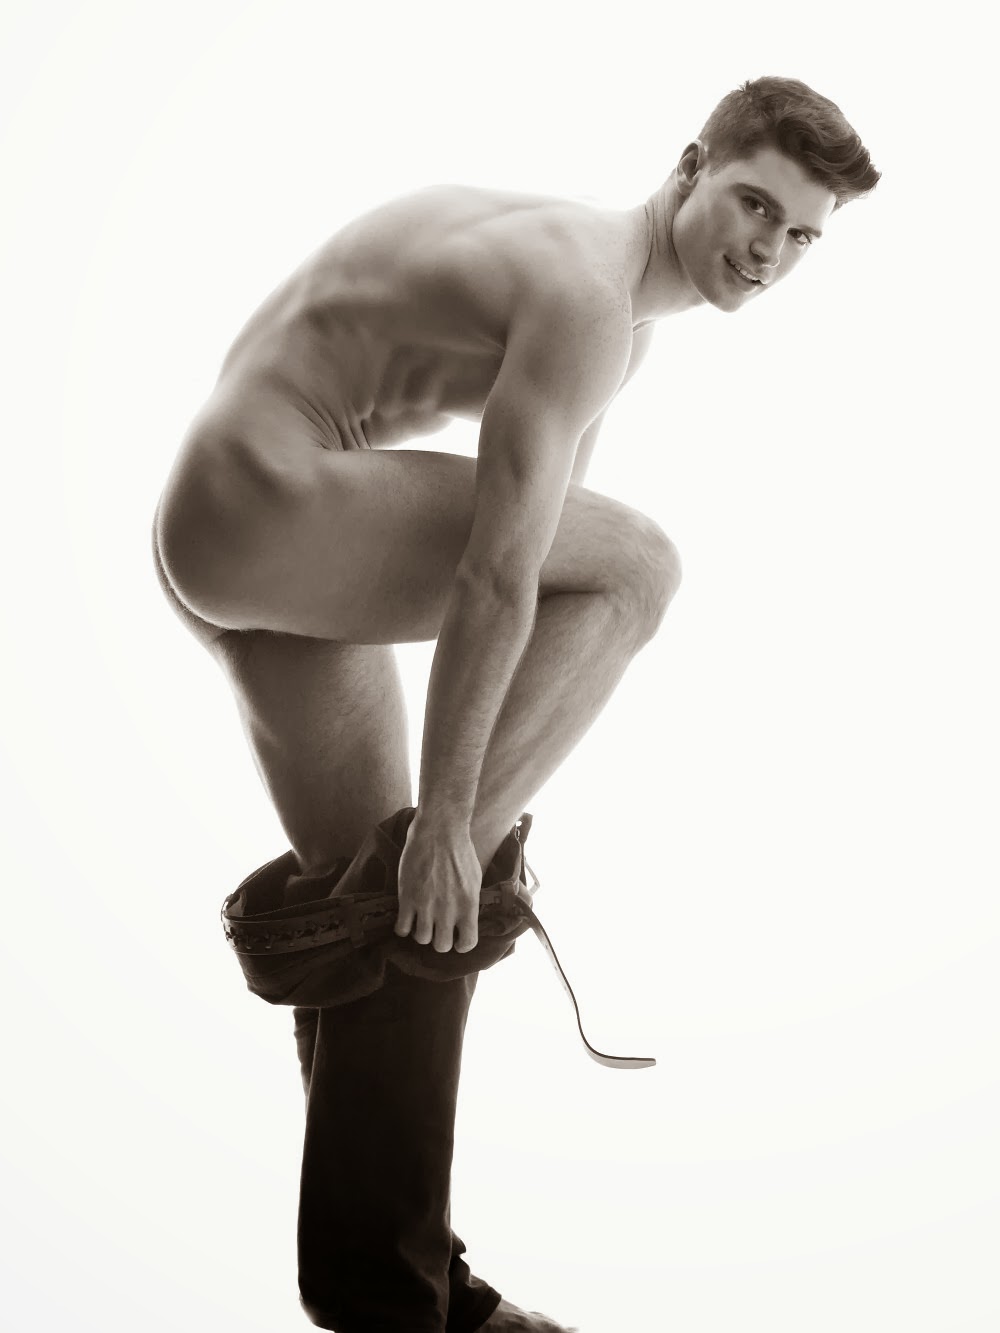 реклама сумок голыми мужиками фото 36